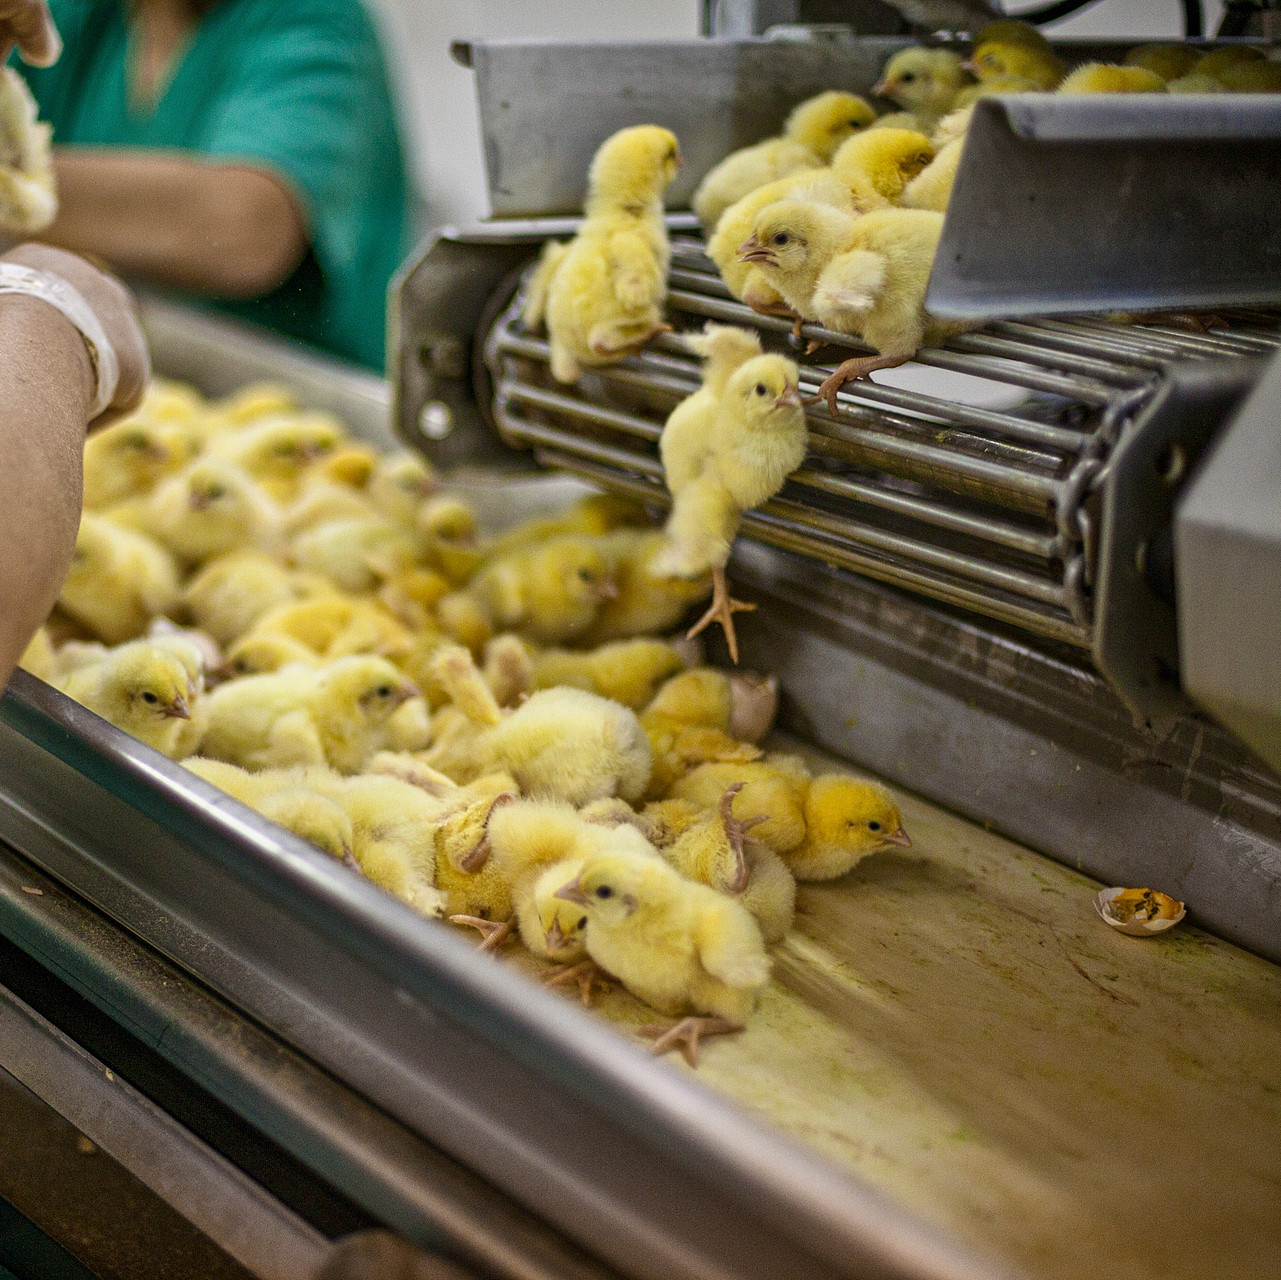 Chicks being sorted on a conveyor belt